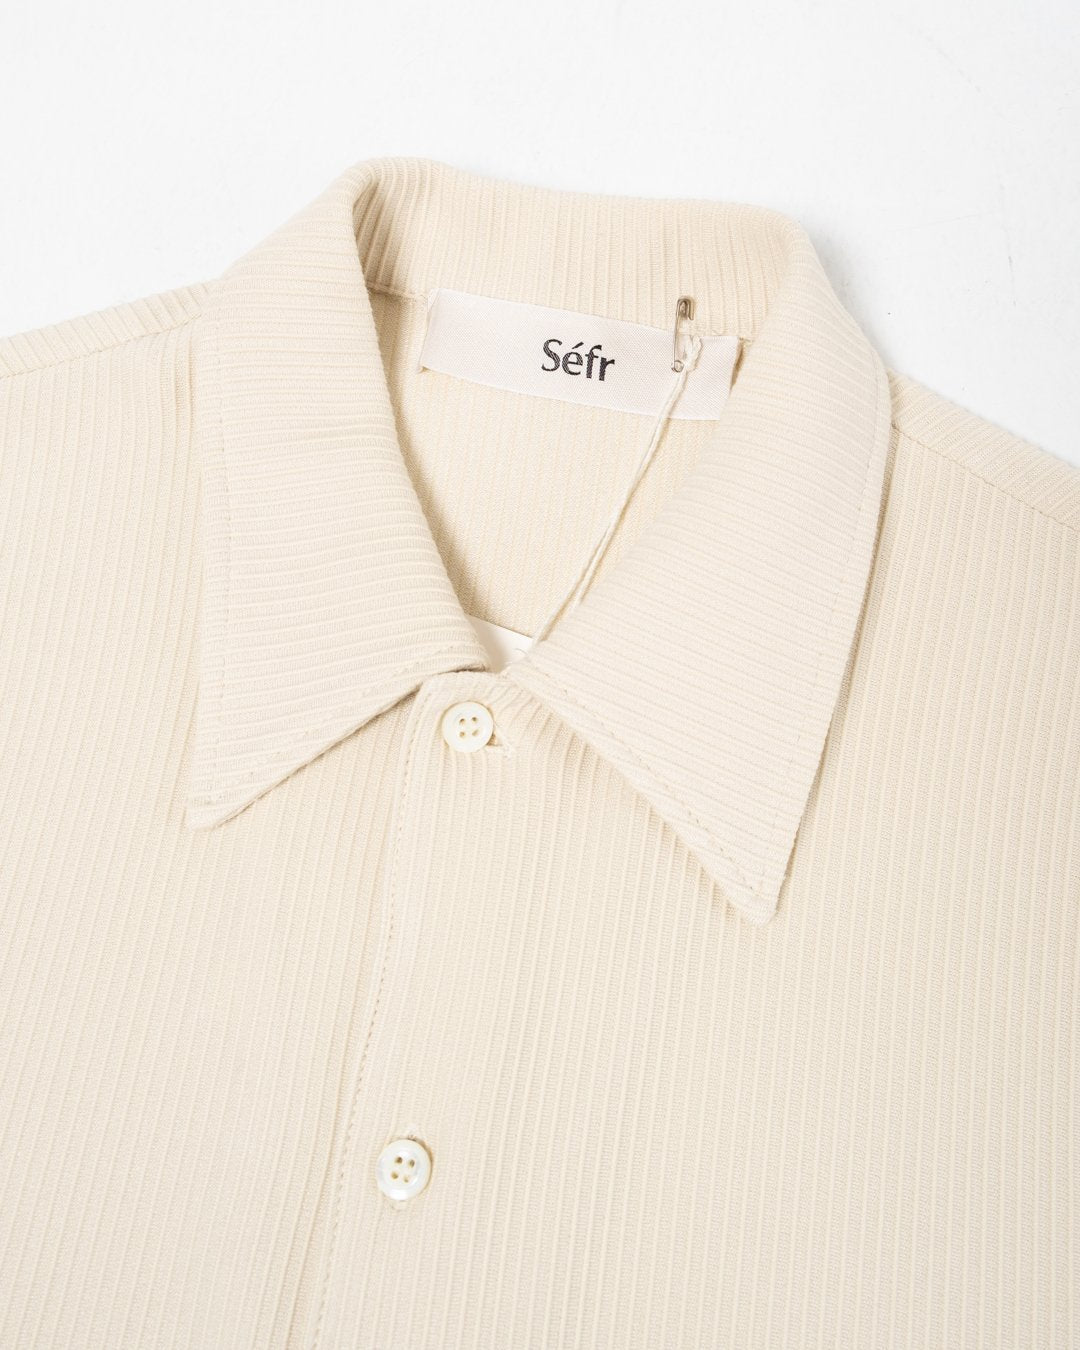 Suneham Shirt Off White Striped - Meadow